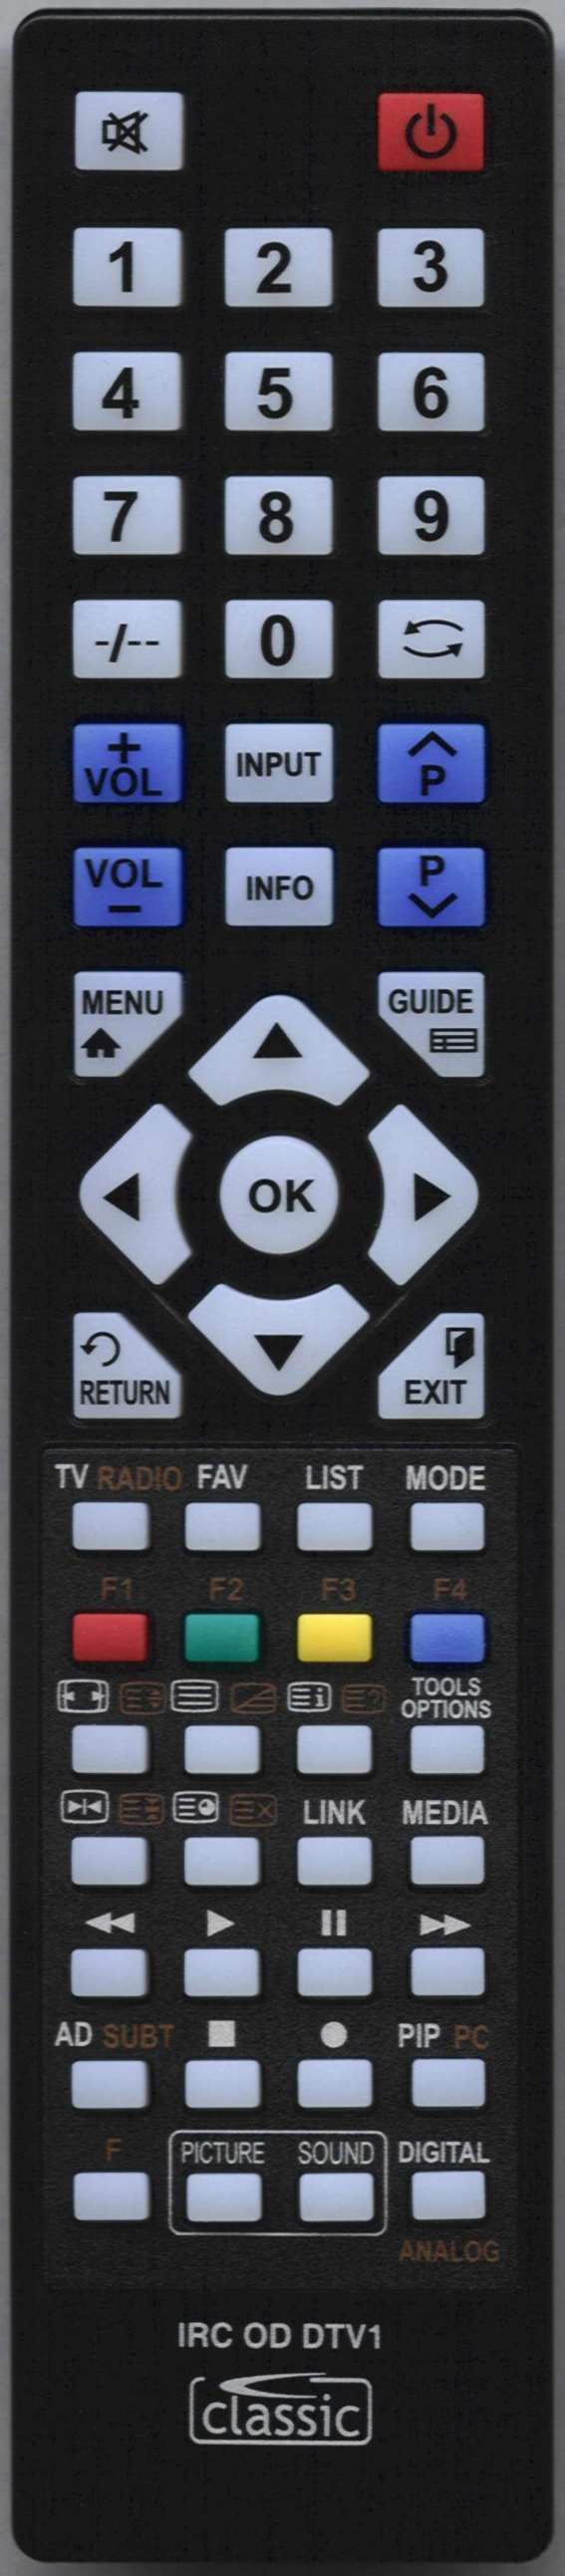 AKURA APL21668FD Remote Control